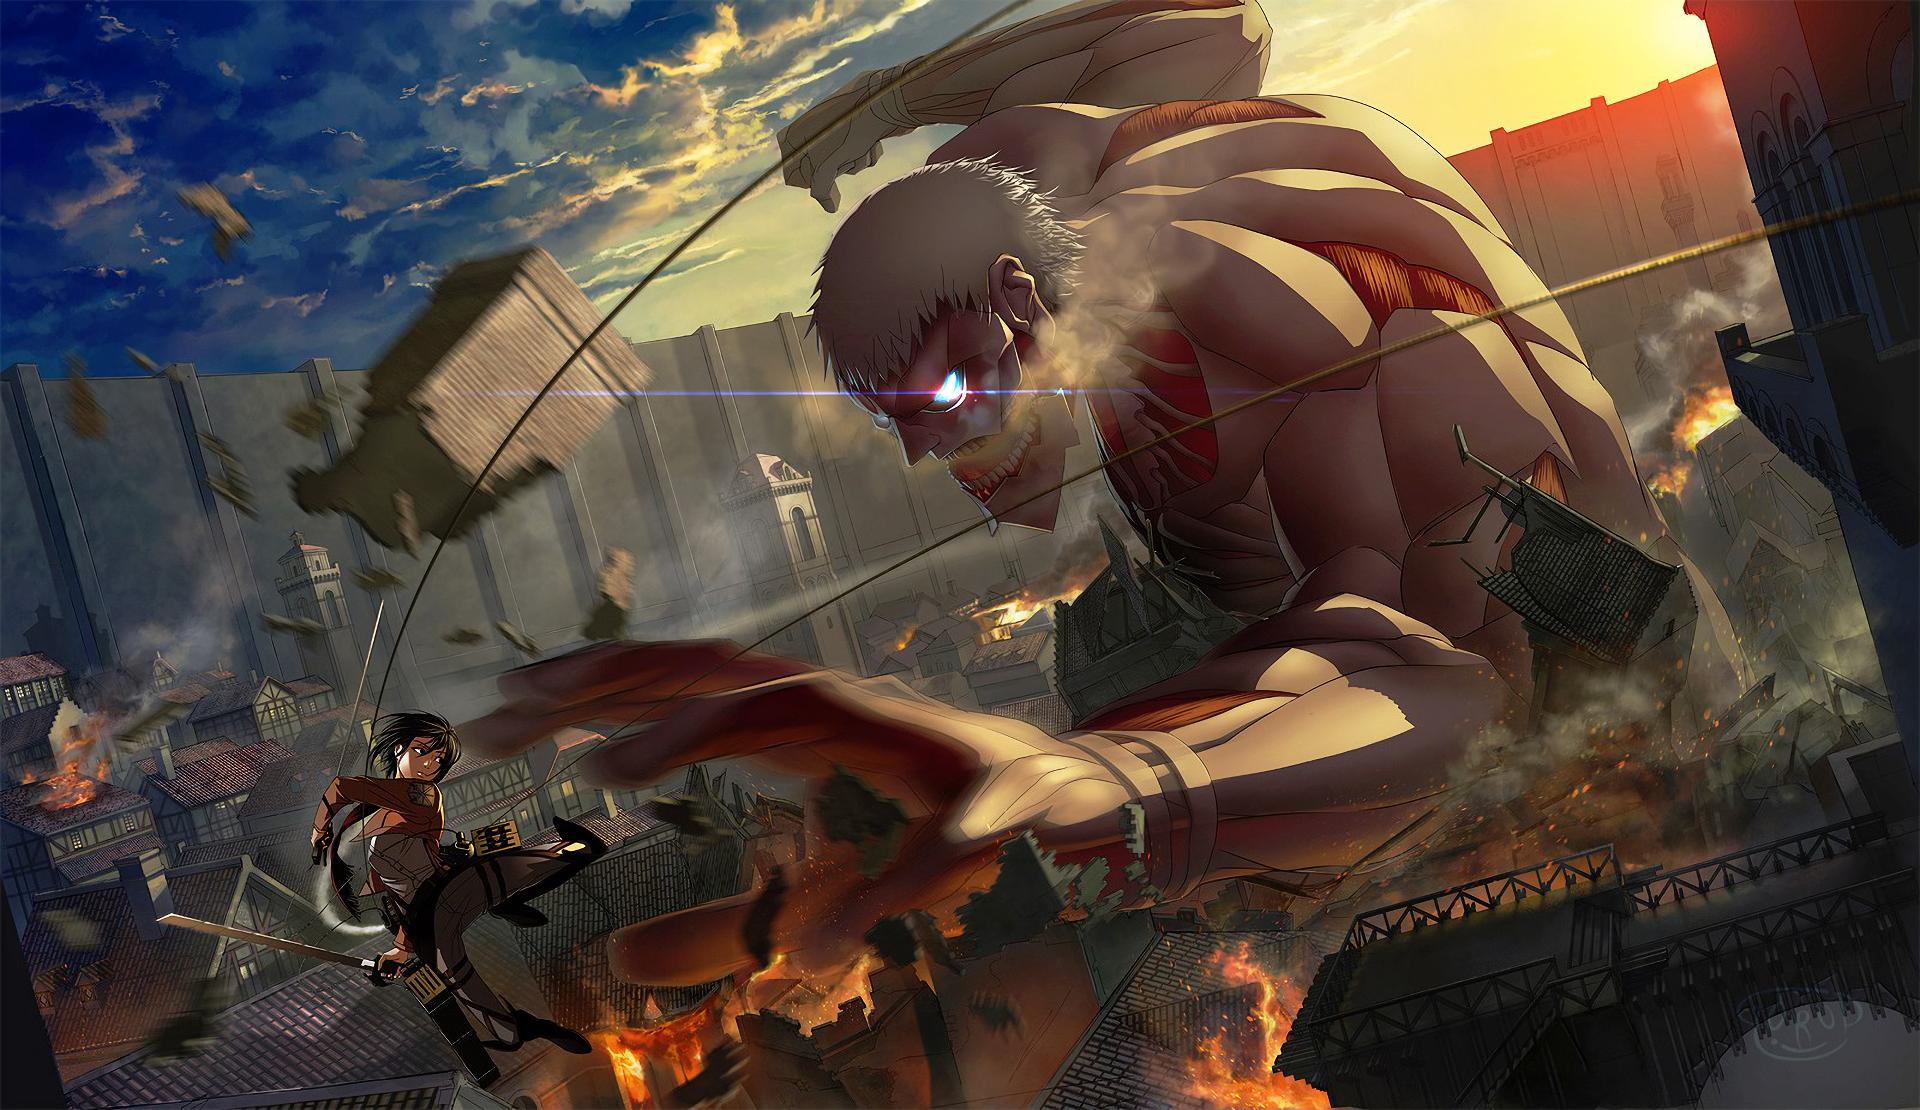 Attack On Titan The Game Unreleased For Android Apk Download - roblox attack on titan gfx